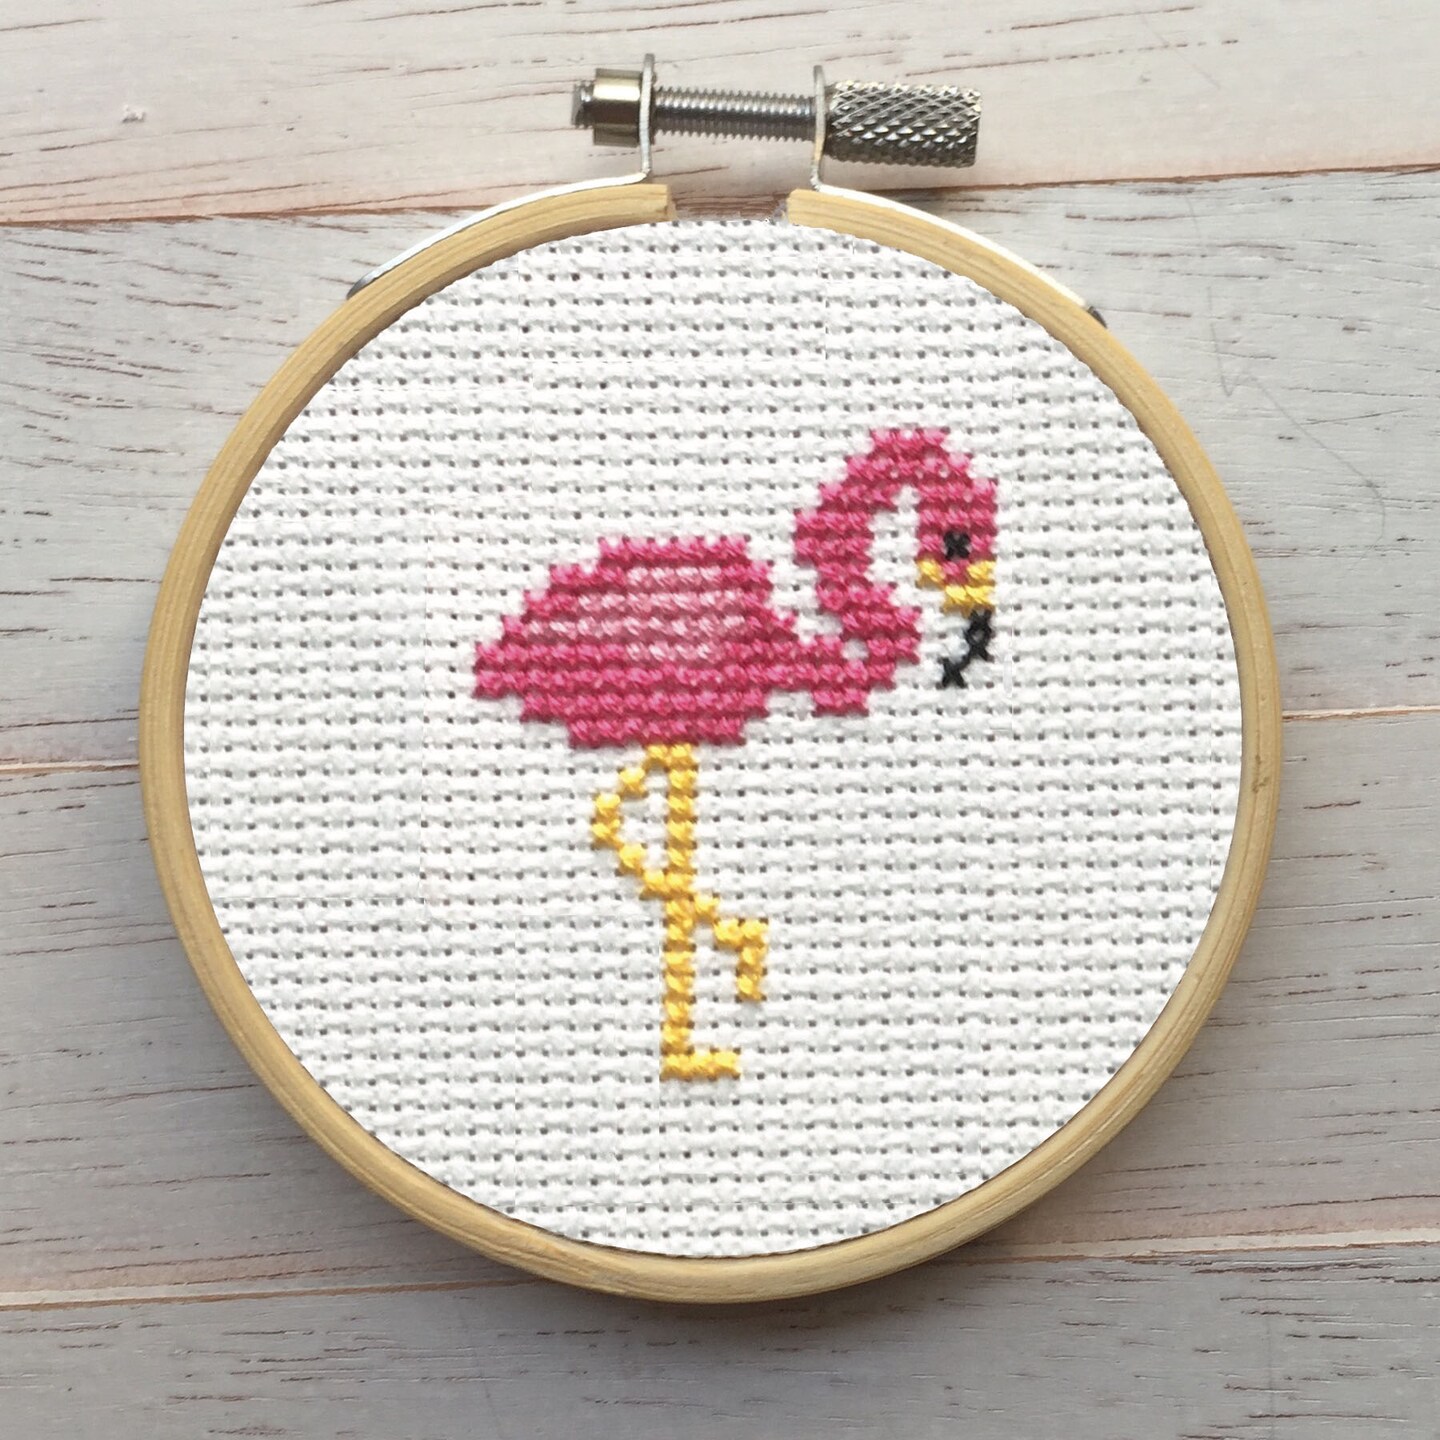 Counted Cross Stitch Bookmark Kit Flamingo - DIY Needlecraft Kit